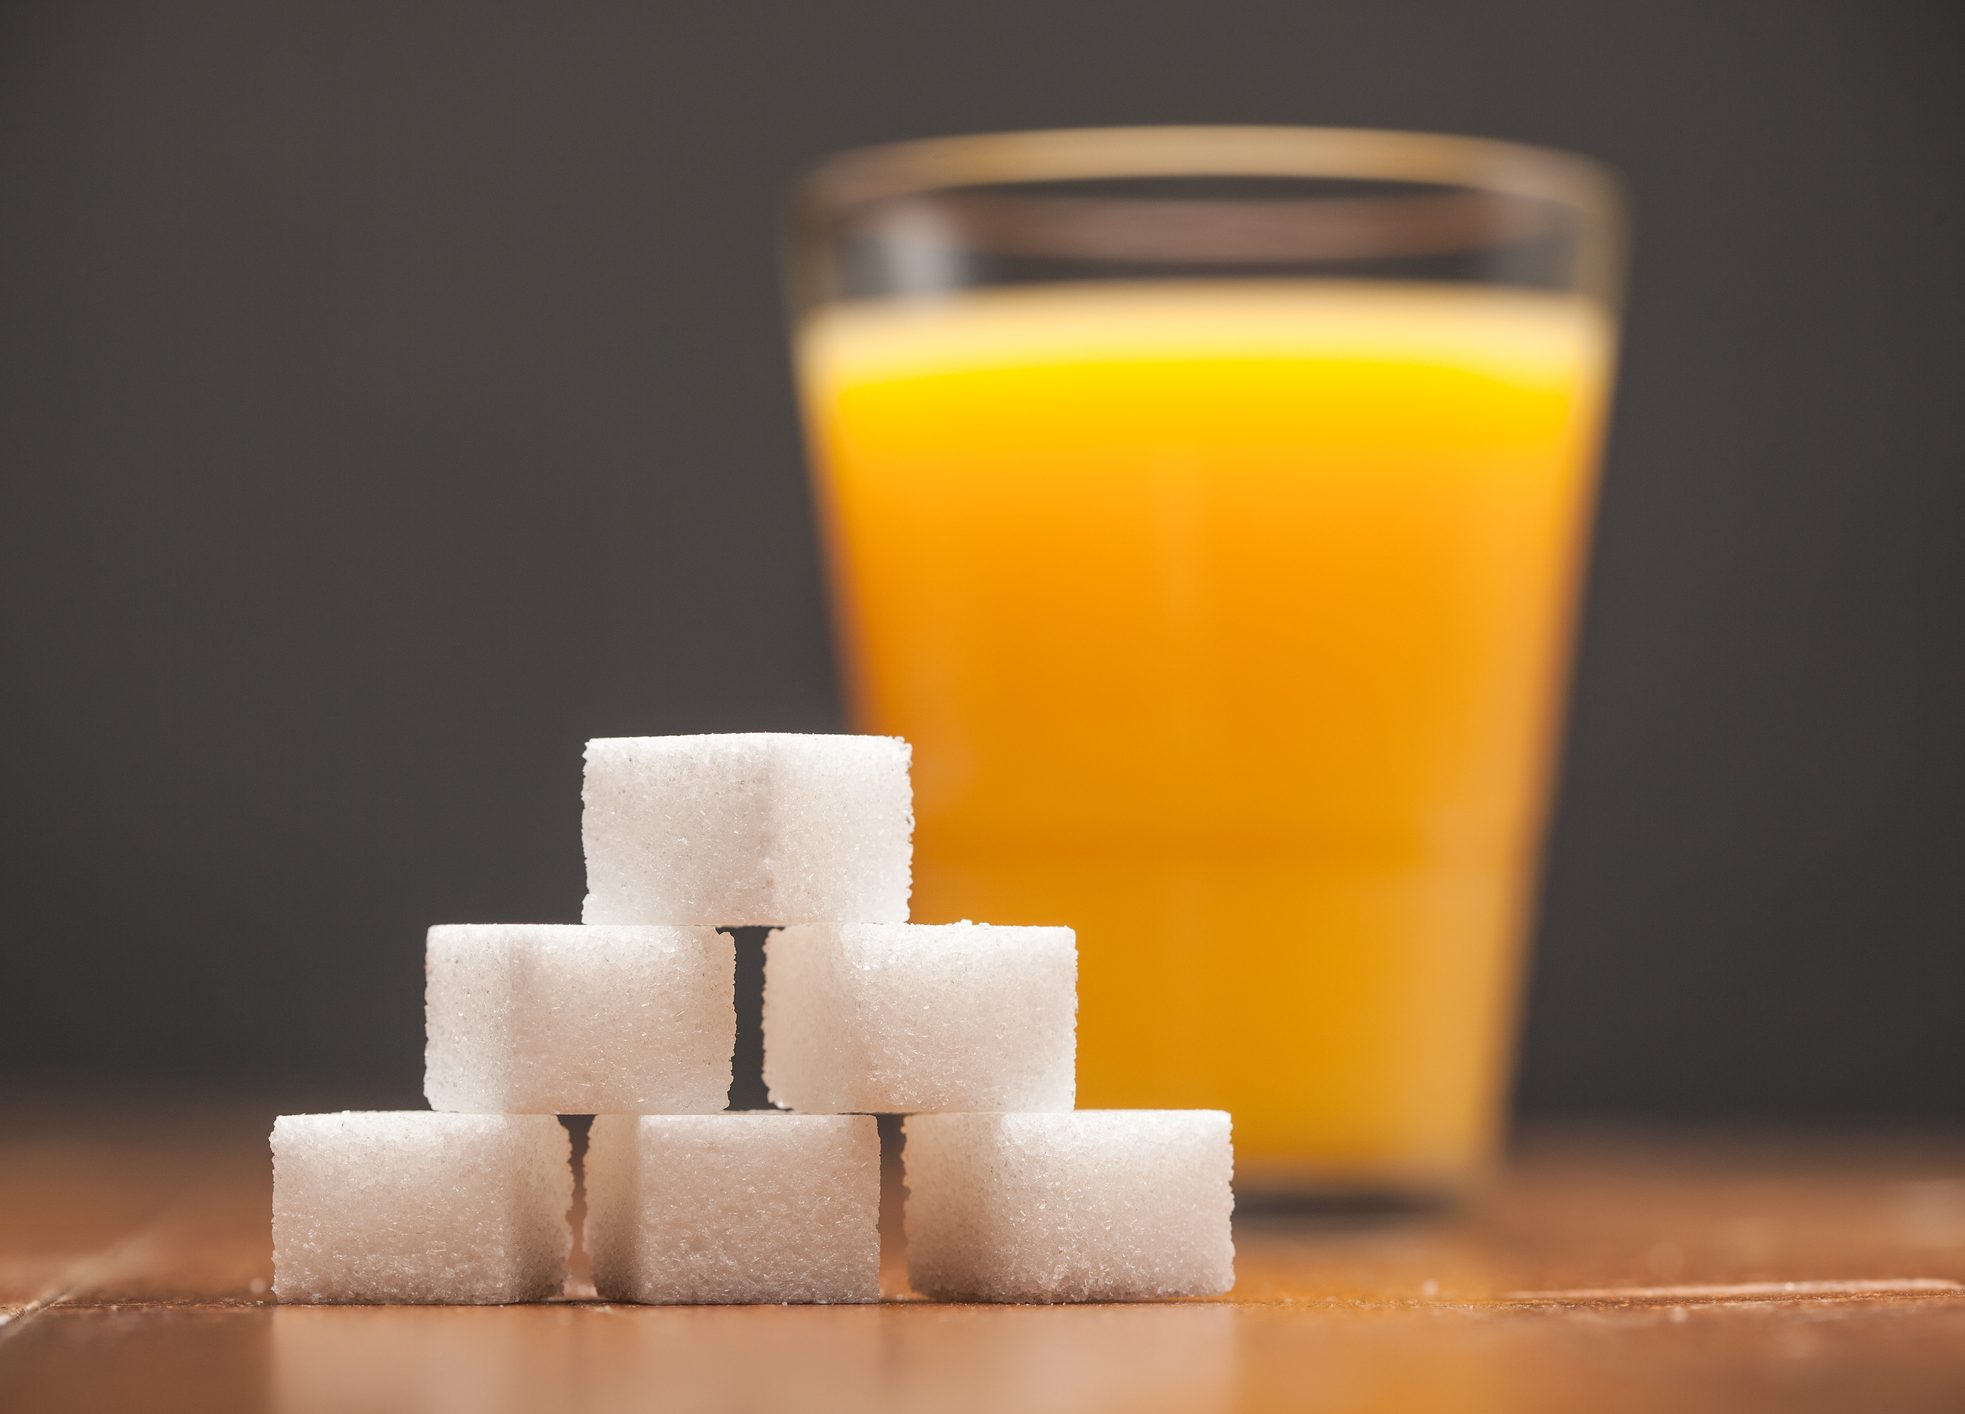 FUNIBER-amounts-of-sugar-in-food-glass-of-orange-juice